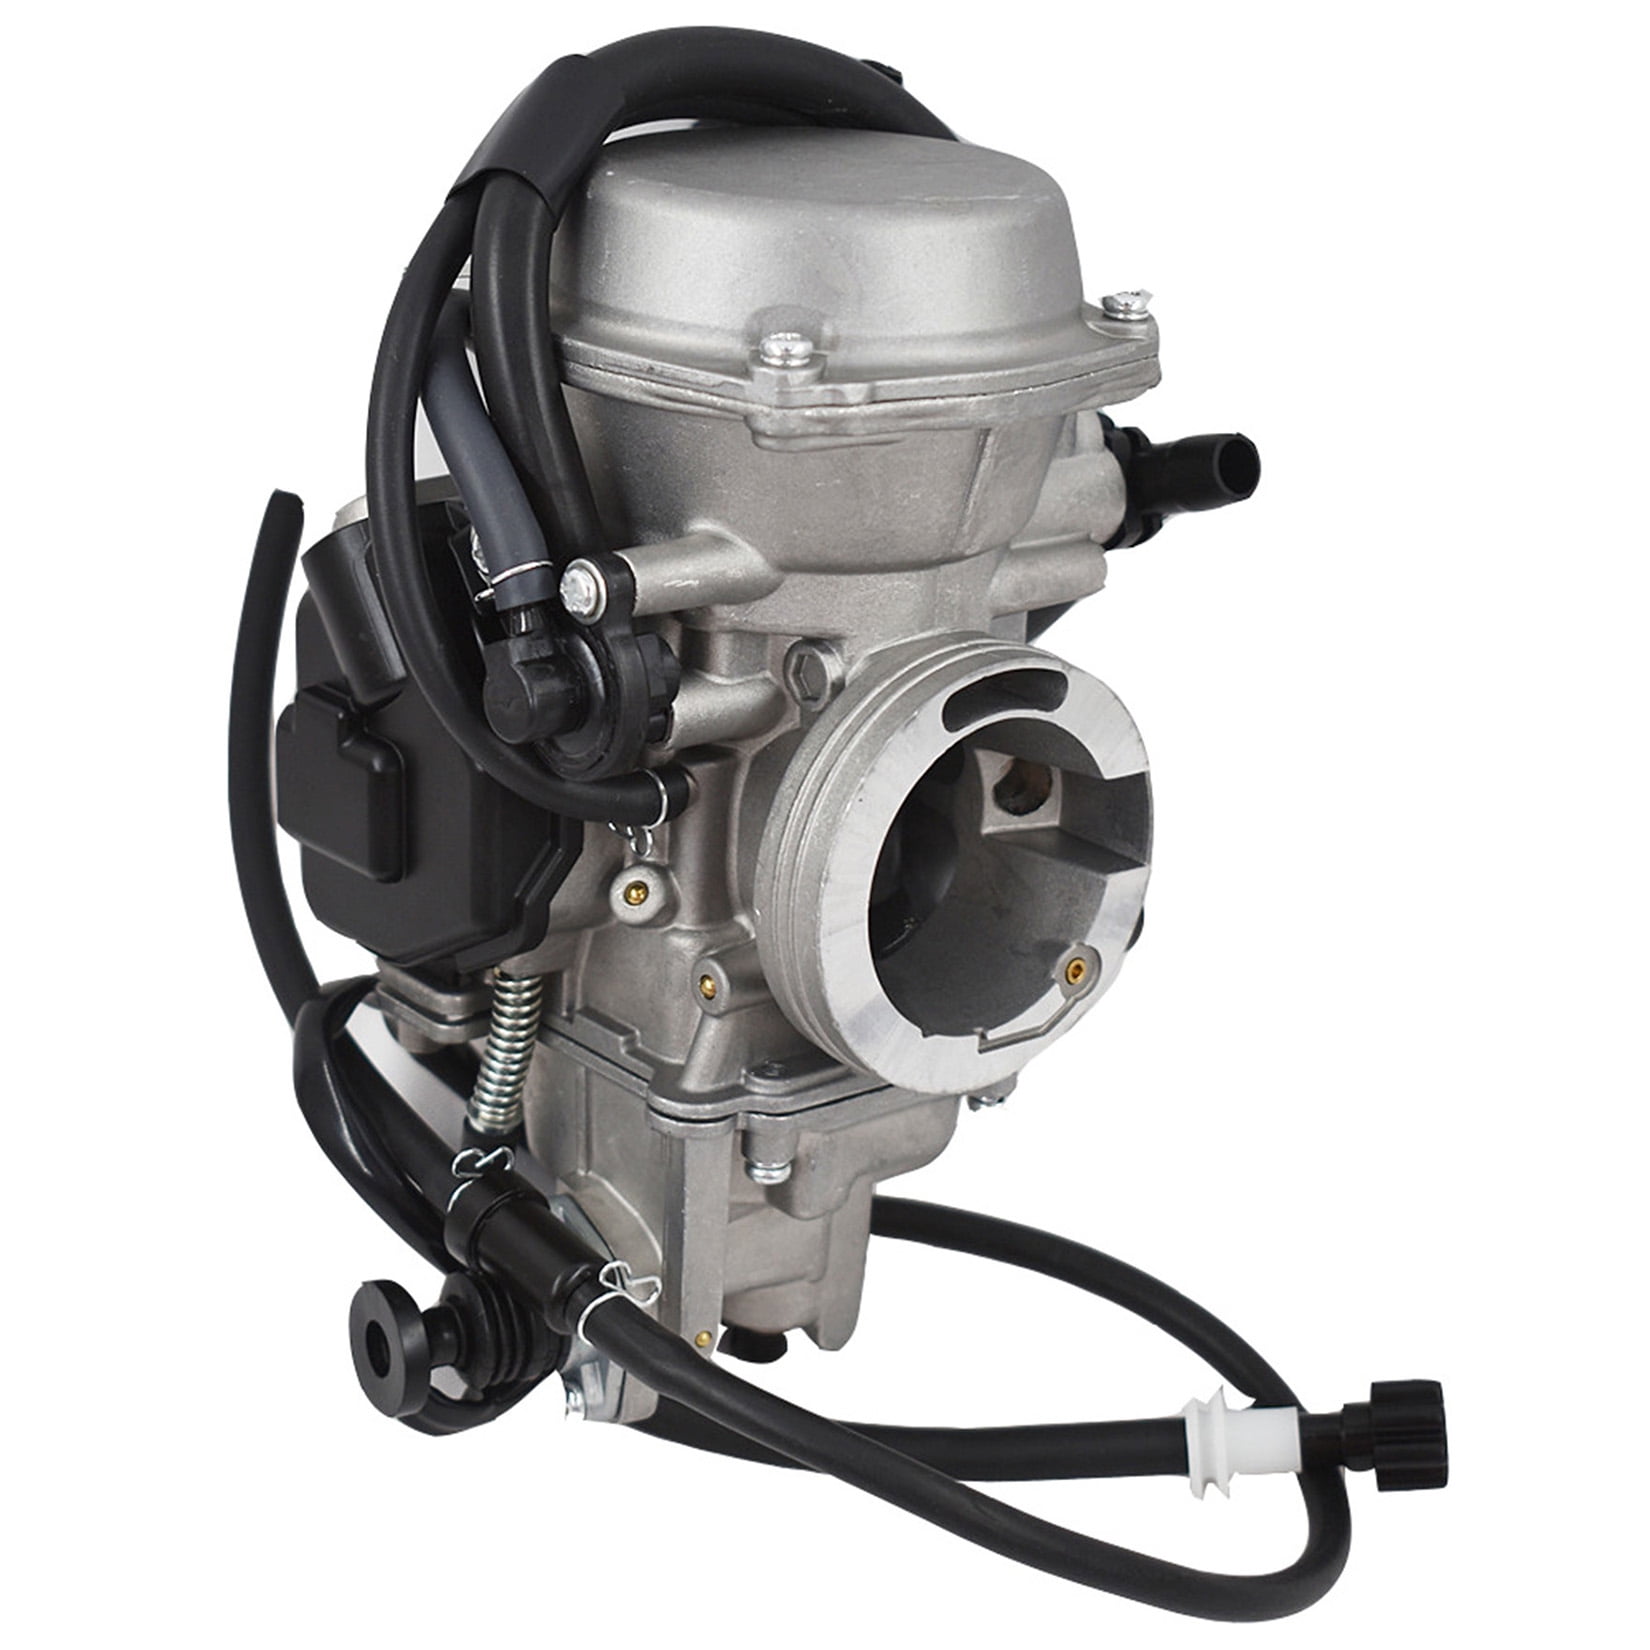 650 Carburetor ATV Carb 16100HN8013 Fit for 2003 2004 2005 Honda Rincon 650  650FA 4x4, 2004 2005 Honda Rincon 650 650FGA 4x4 GPScape